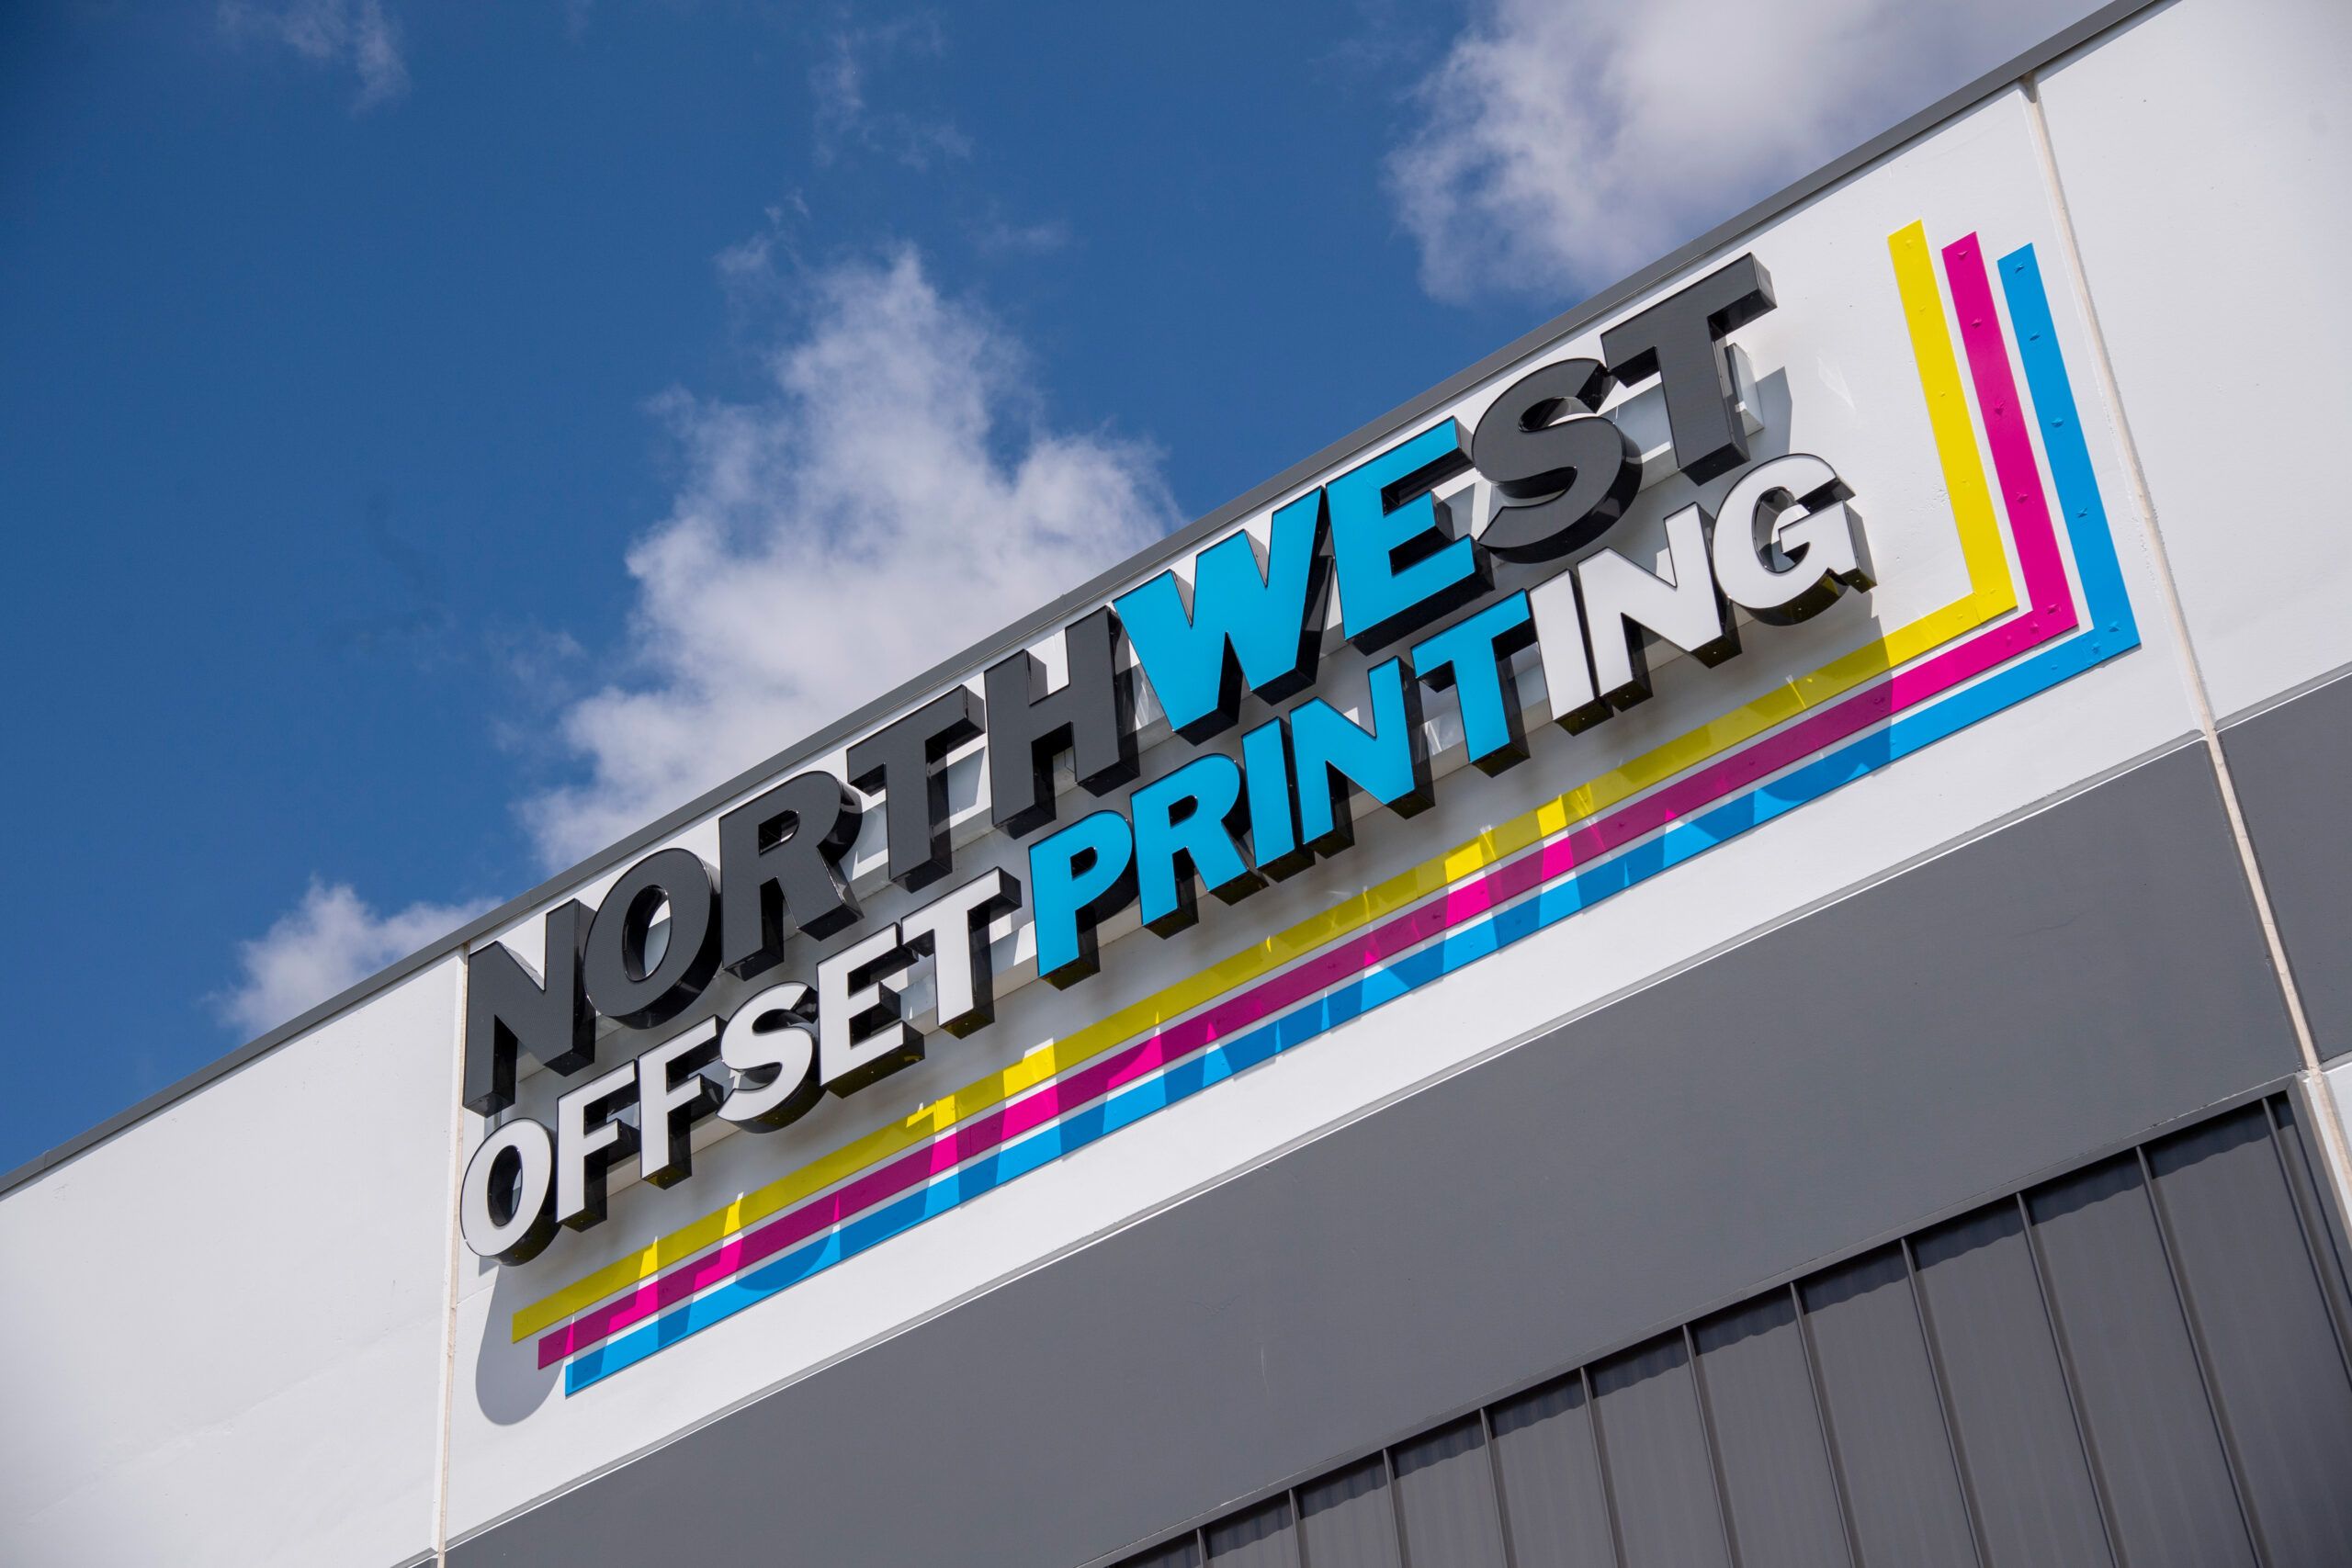 Northwest Offset Printing Building Sign